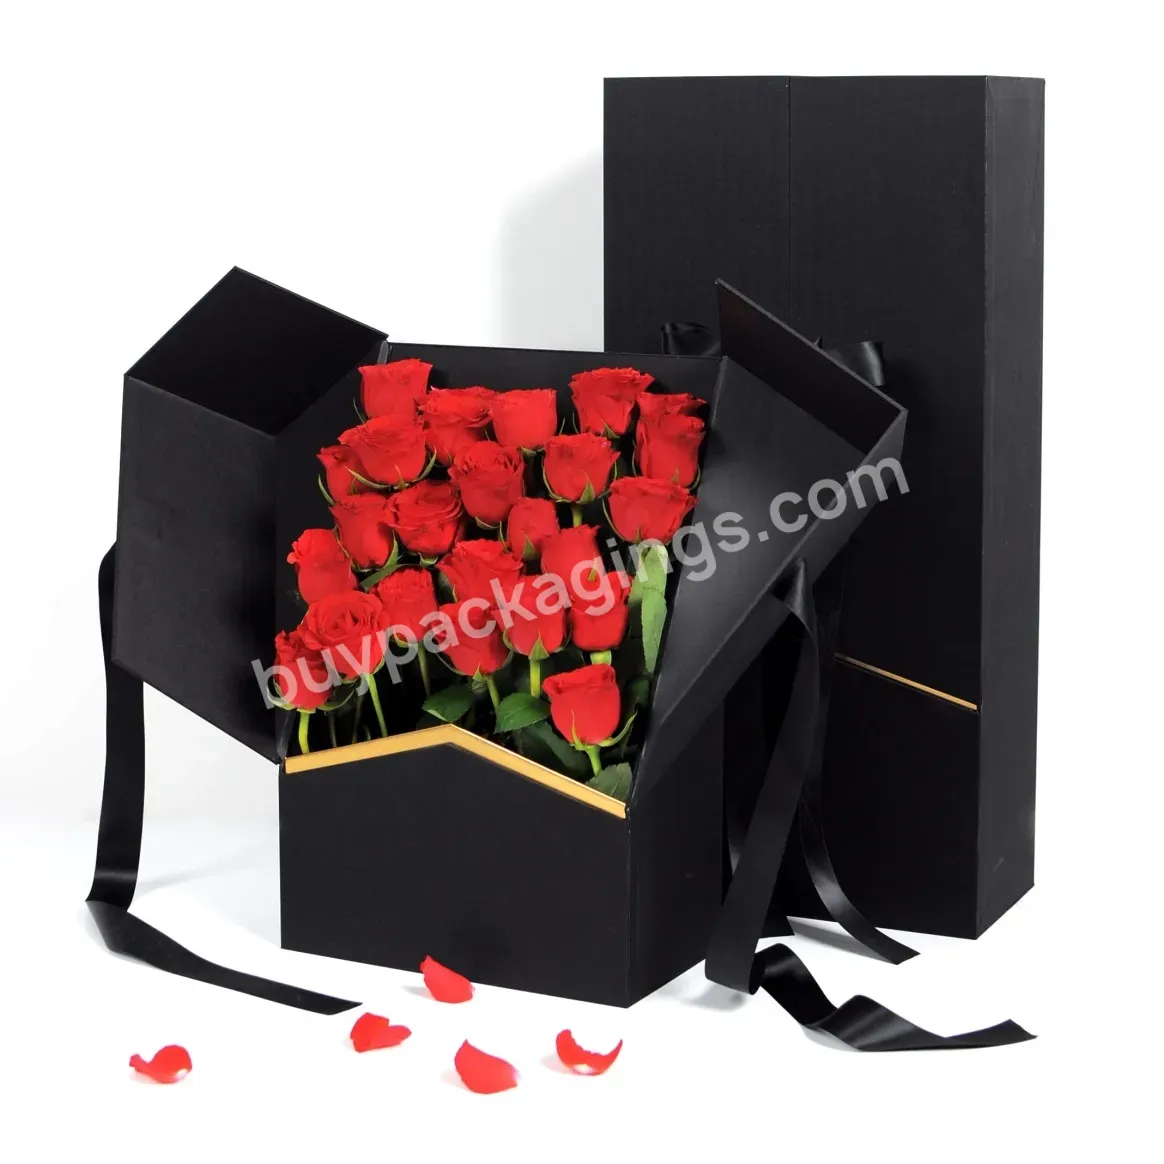 Luxury Bat Design Rose Flower Gift Paper Box Rectangular Cardboard Packaging Box